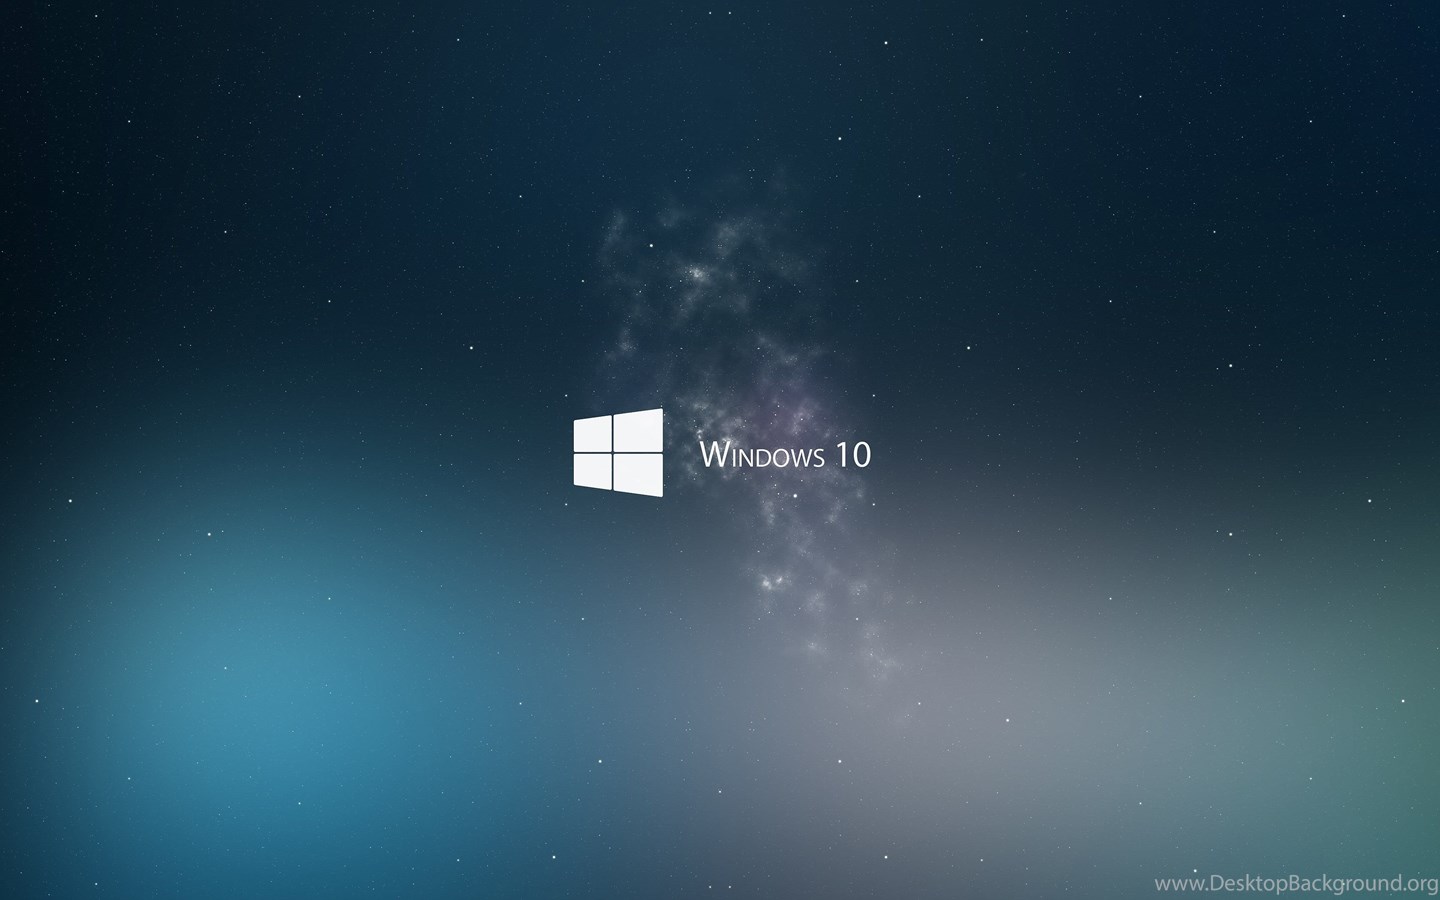 Download Windows 10 4K Ultra HD Wallpapers TechJeep Desktop Background